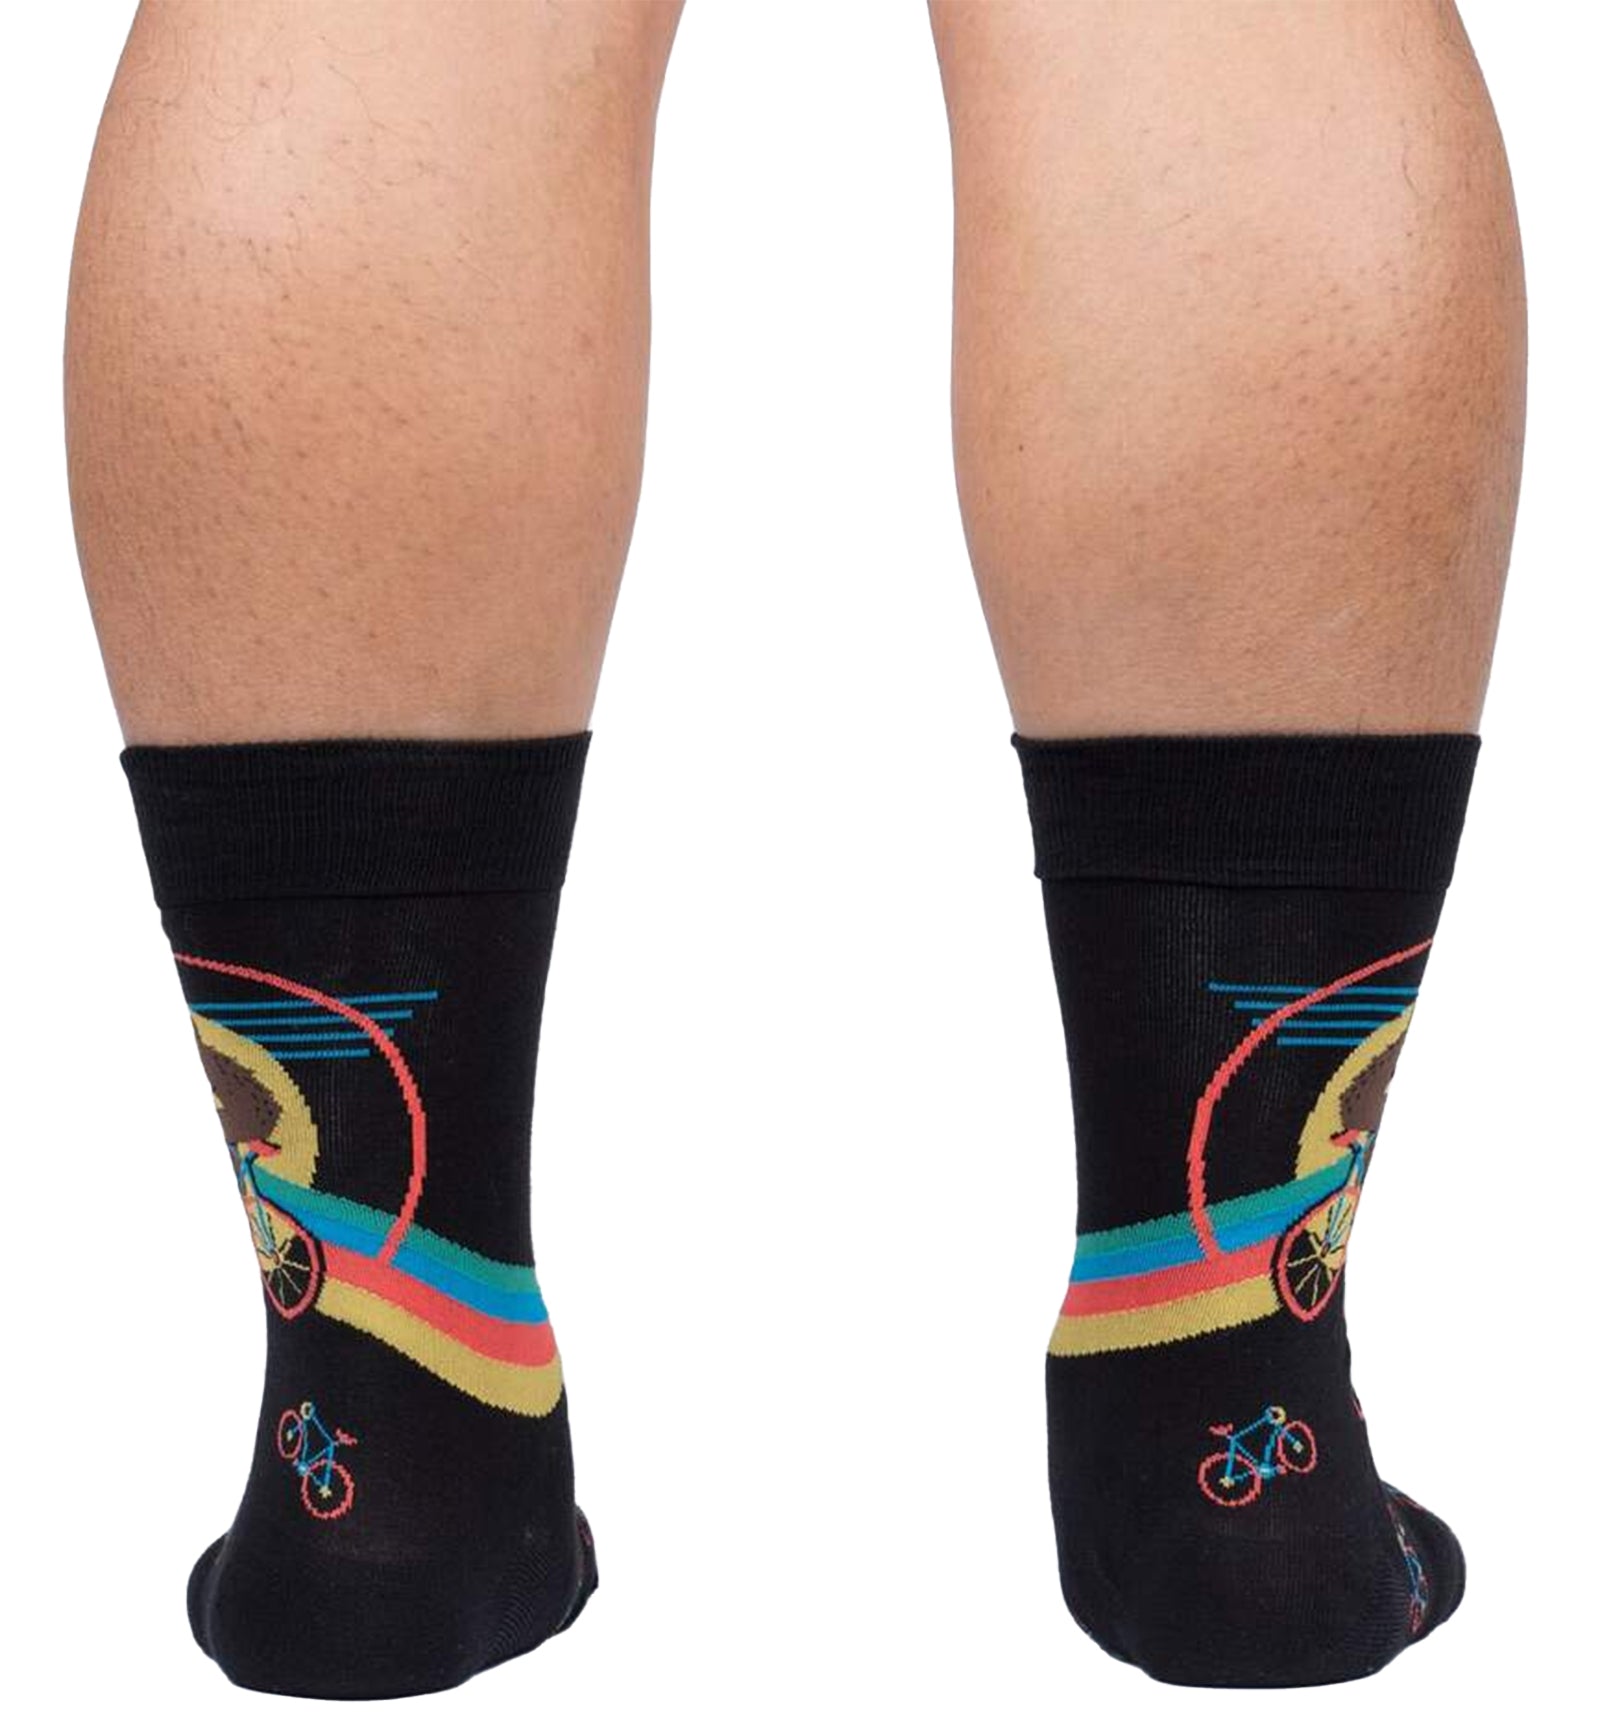 SOCK it to me Men's Crew Socks (MEF0538),Bike-Squatch - Bike-Squatch,One Size